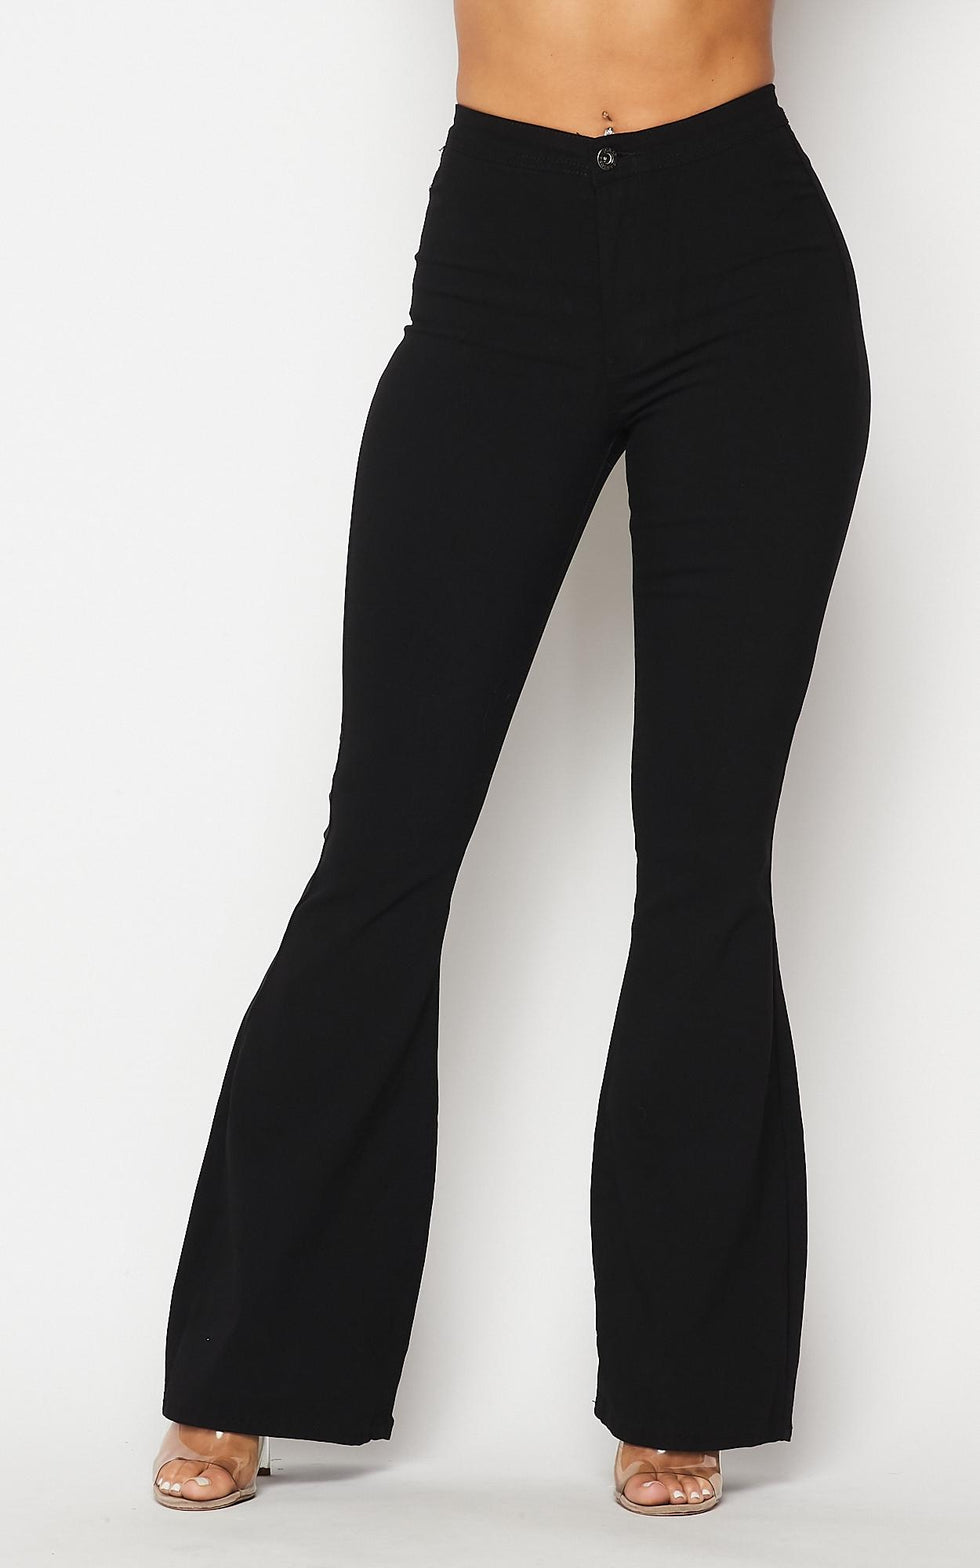 Bell Bottom High Waisted Stretchy Jeans - Black – SohoGirl.com